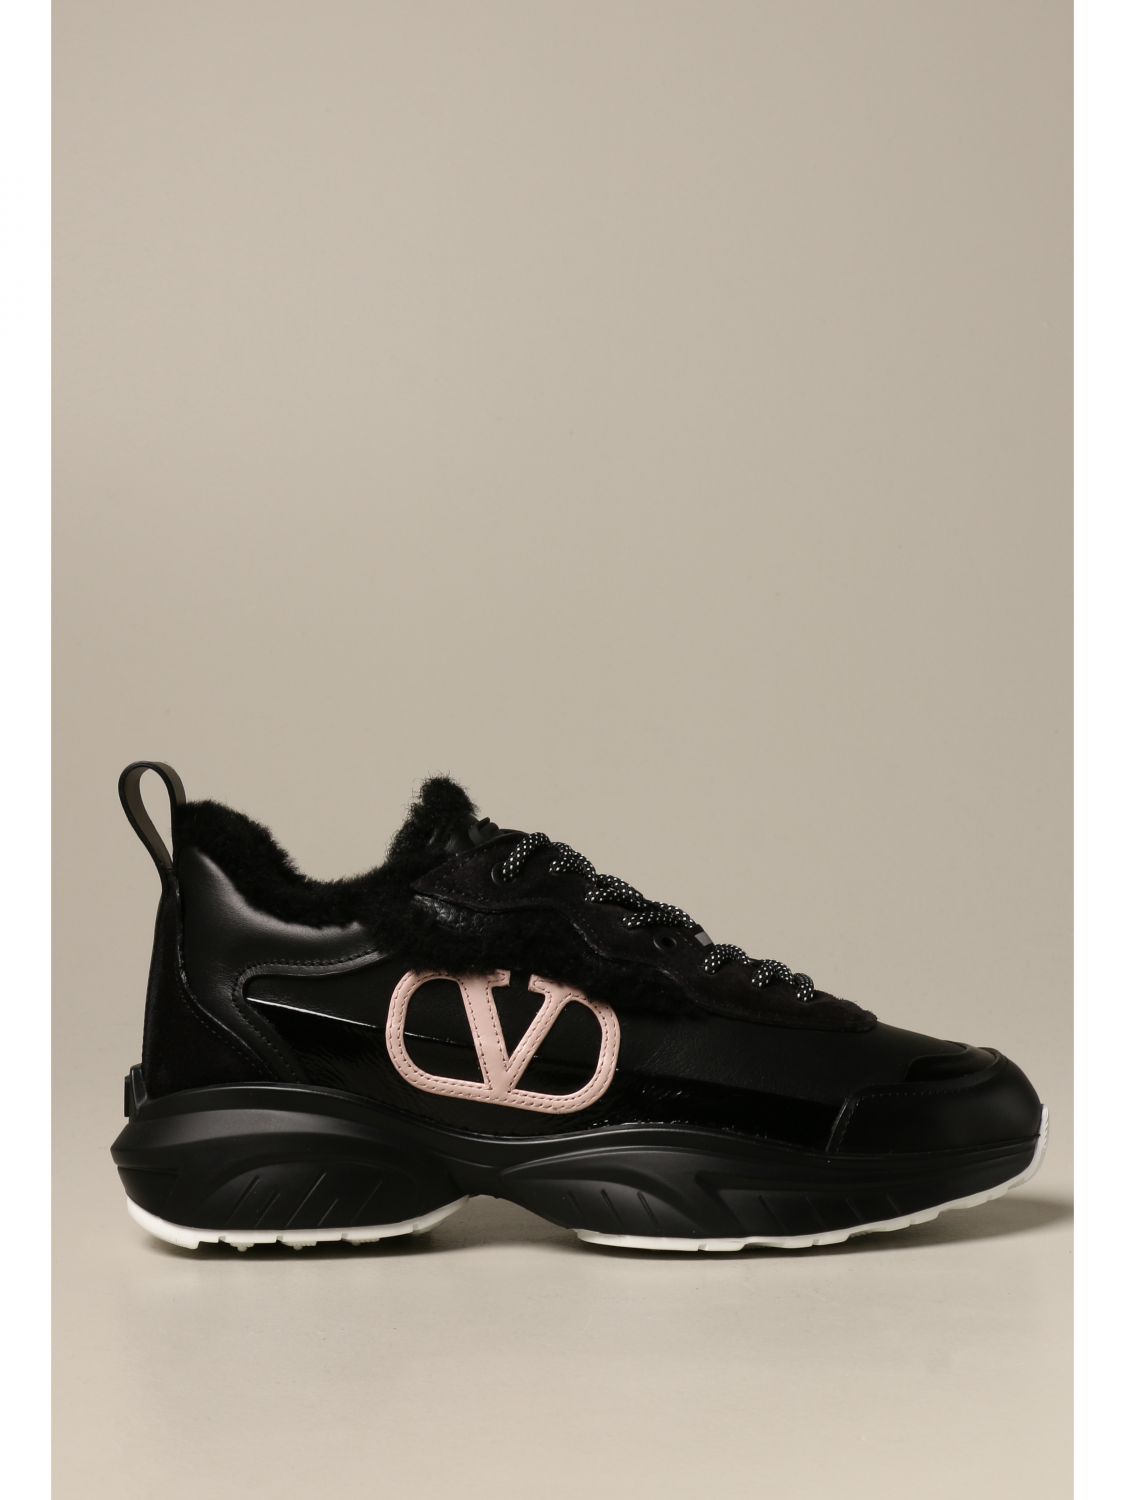 VALENTINO GARAVANI: Shegoes sneakers in leather and fur - Black | Valentino Garavani UW2S0AB1 XZX online at GIGLIO.COM